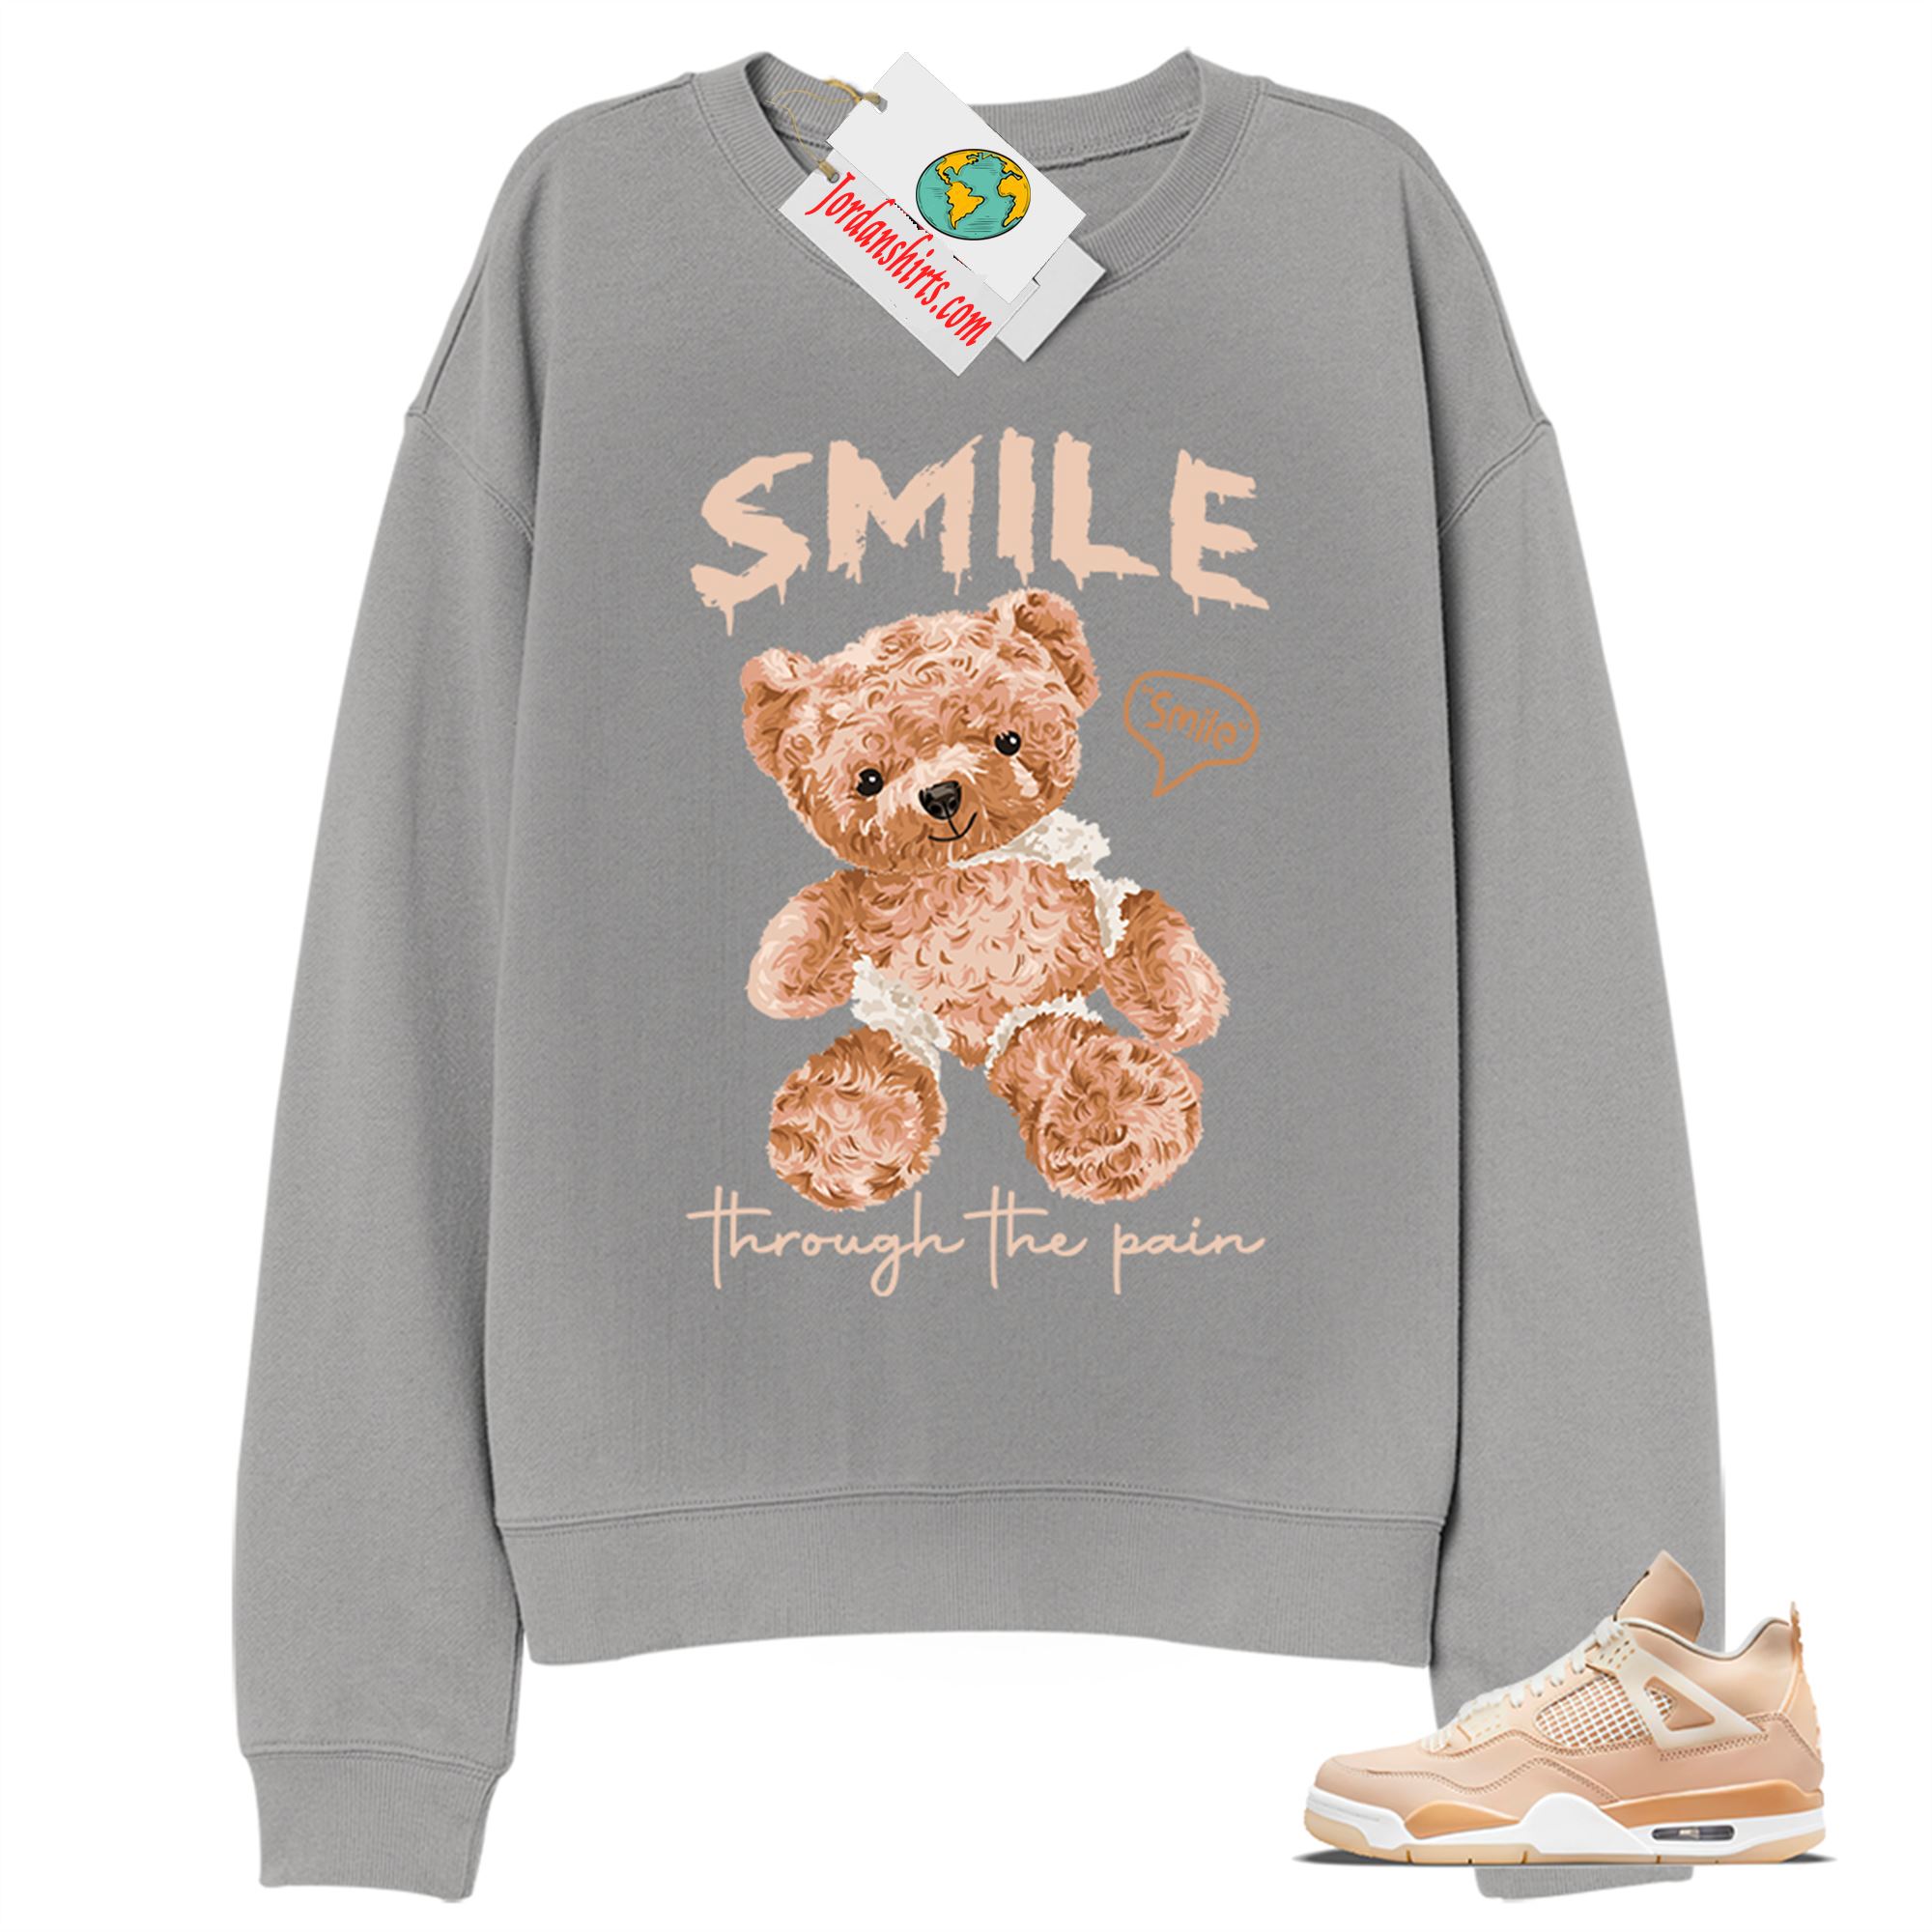 Jordan 4 Sweatshirt, Teddy Bear Smile Pain Grey Sweatshirt Air Jordan 4 Shimmer 4s Plus Size Up To 5xl